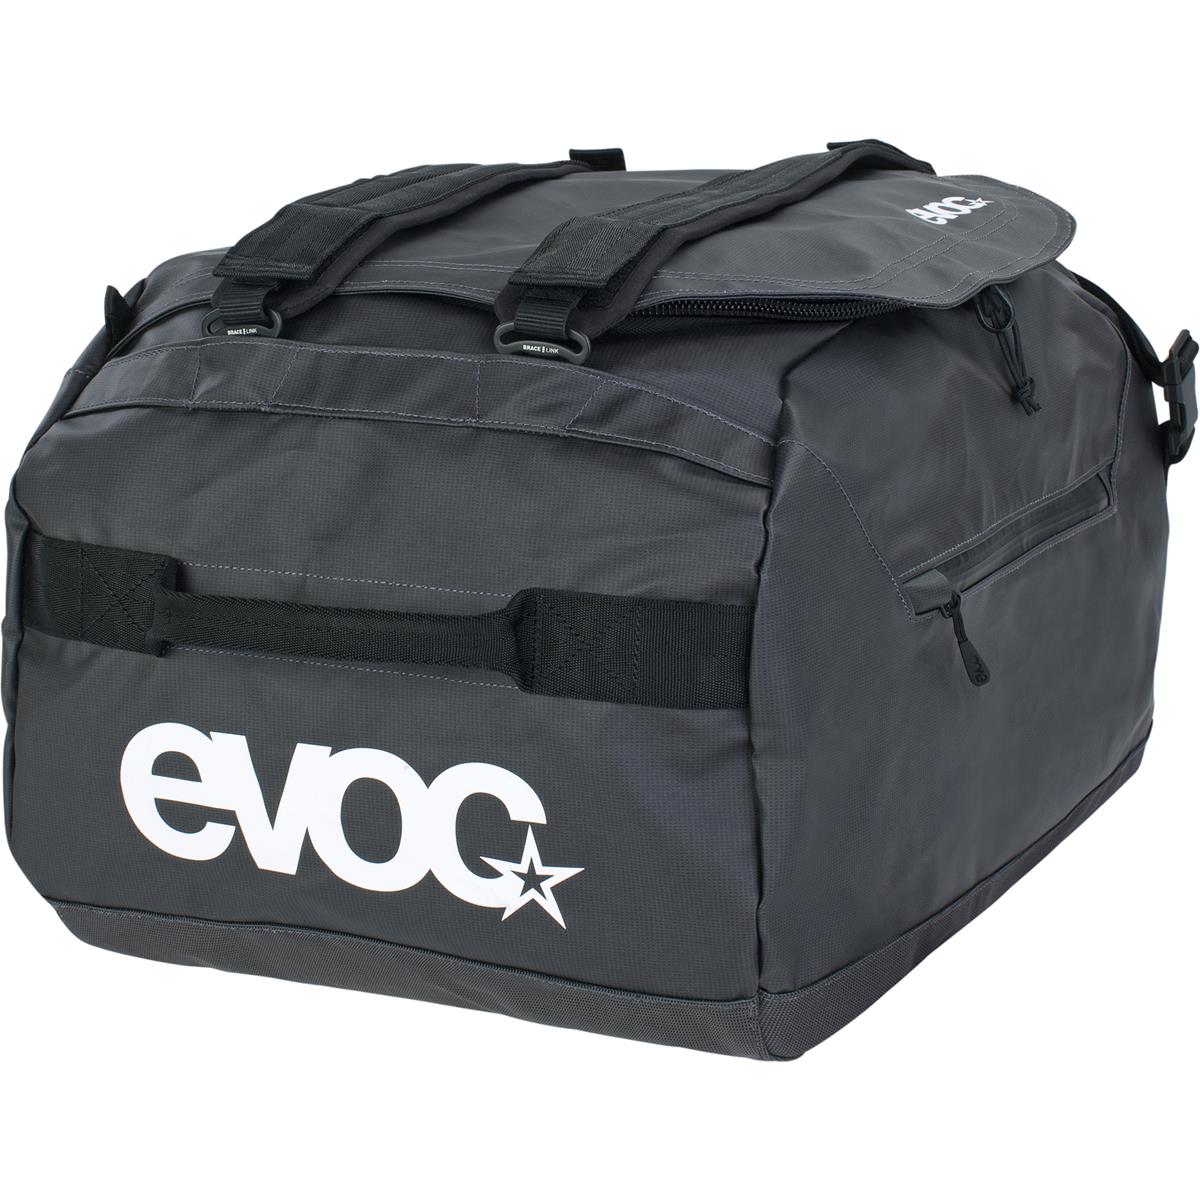 Evoc Duffle Bag Duffle Bag 40 Carbon Gray/Black